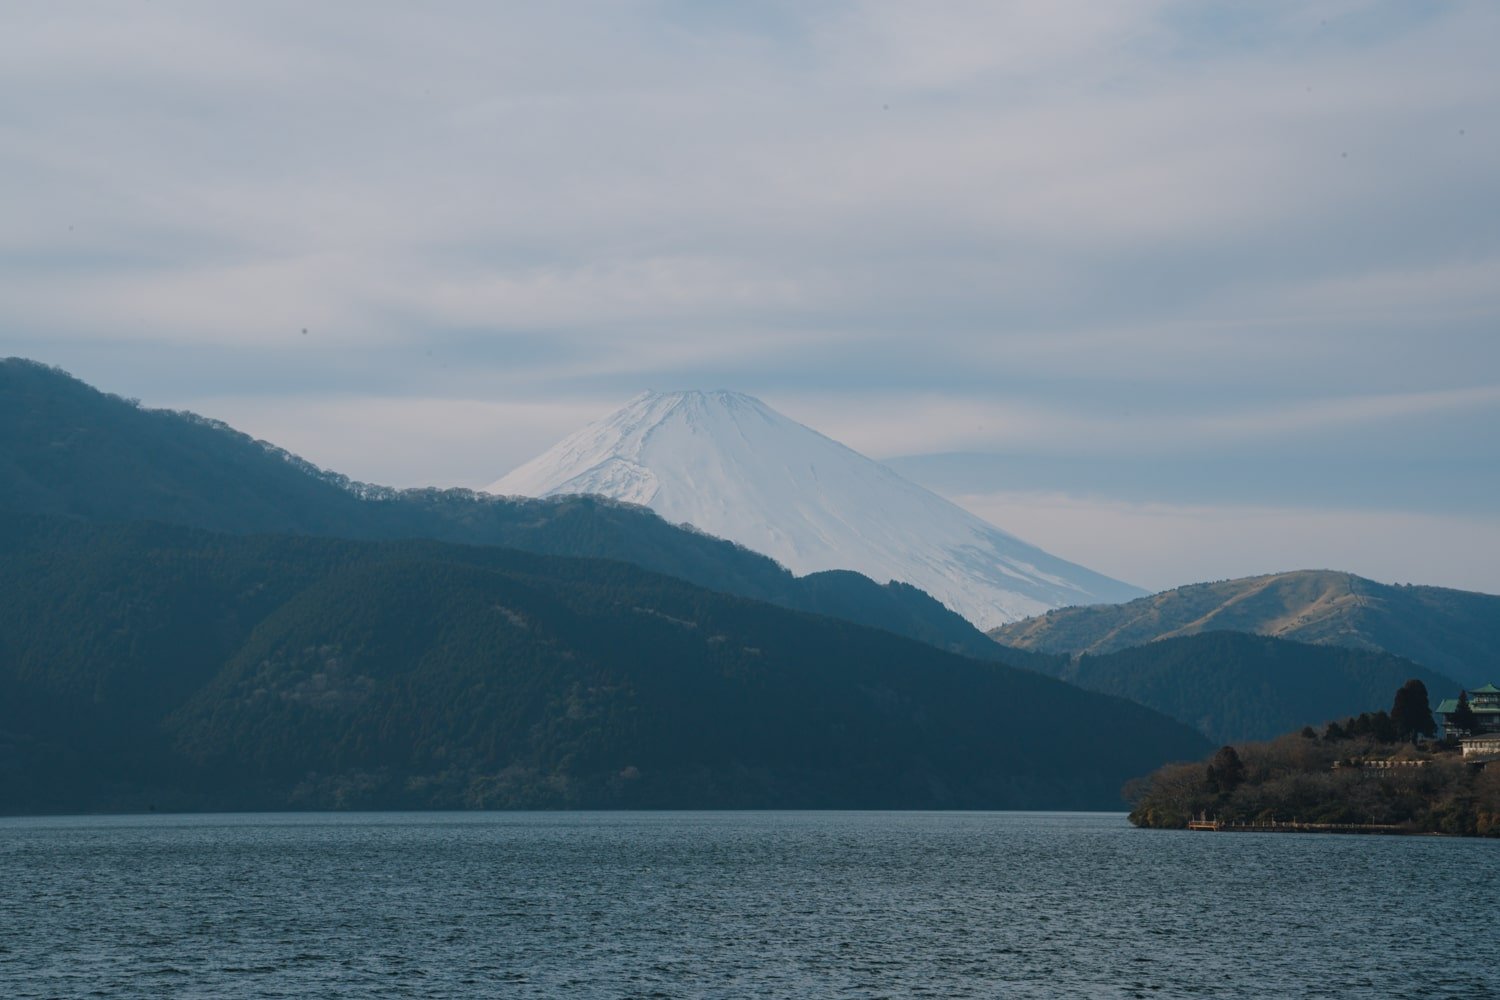 View of Mount Fuji from aboard the Lake Ashi cruise.